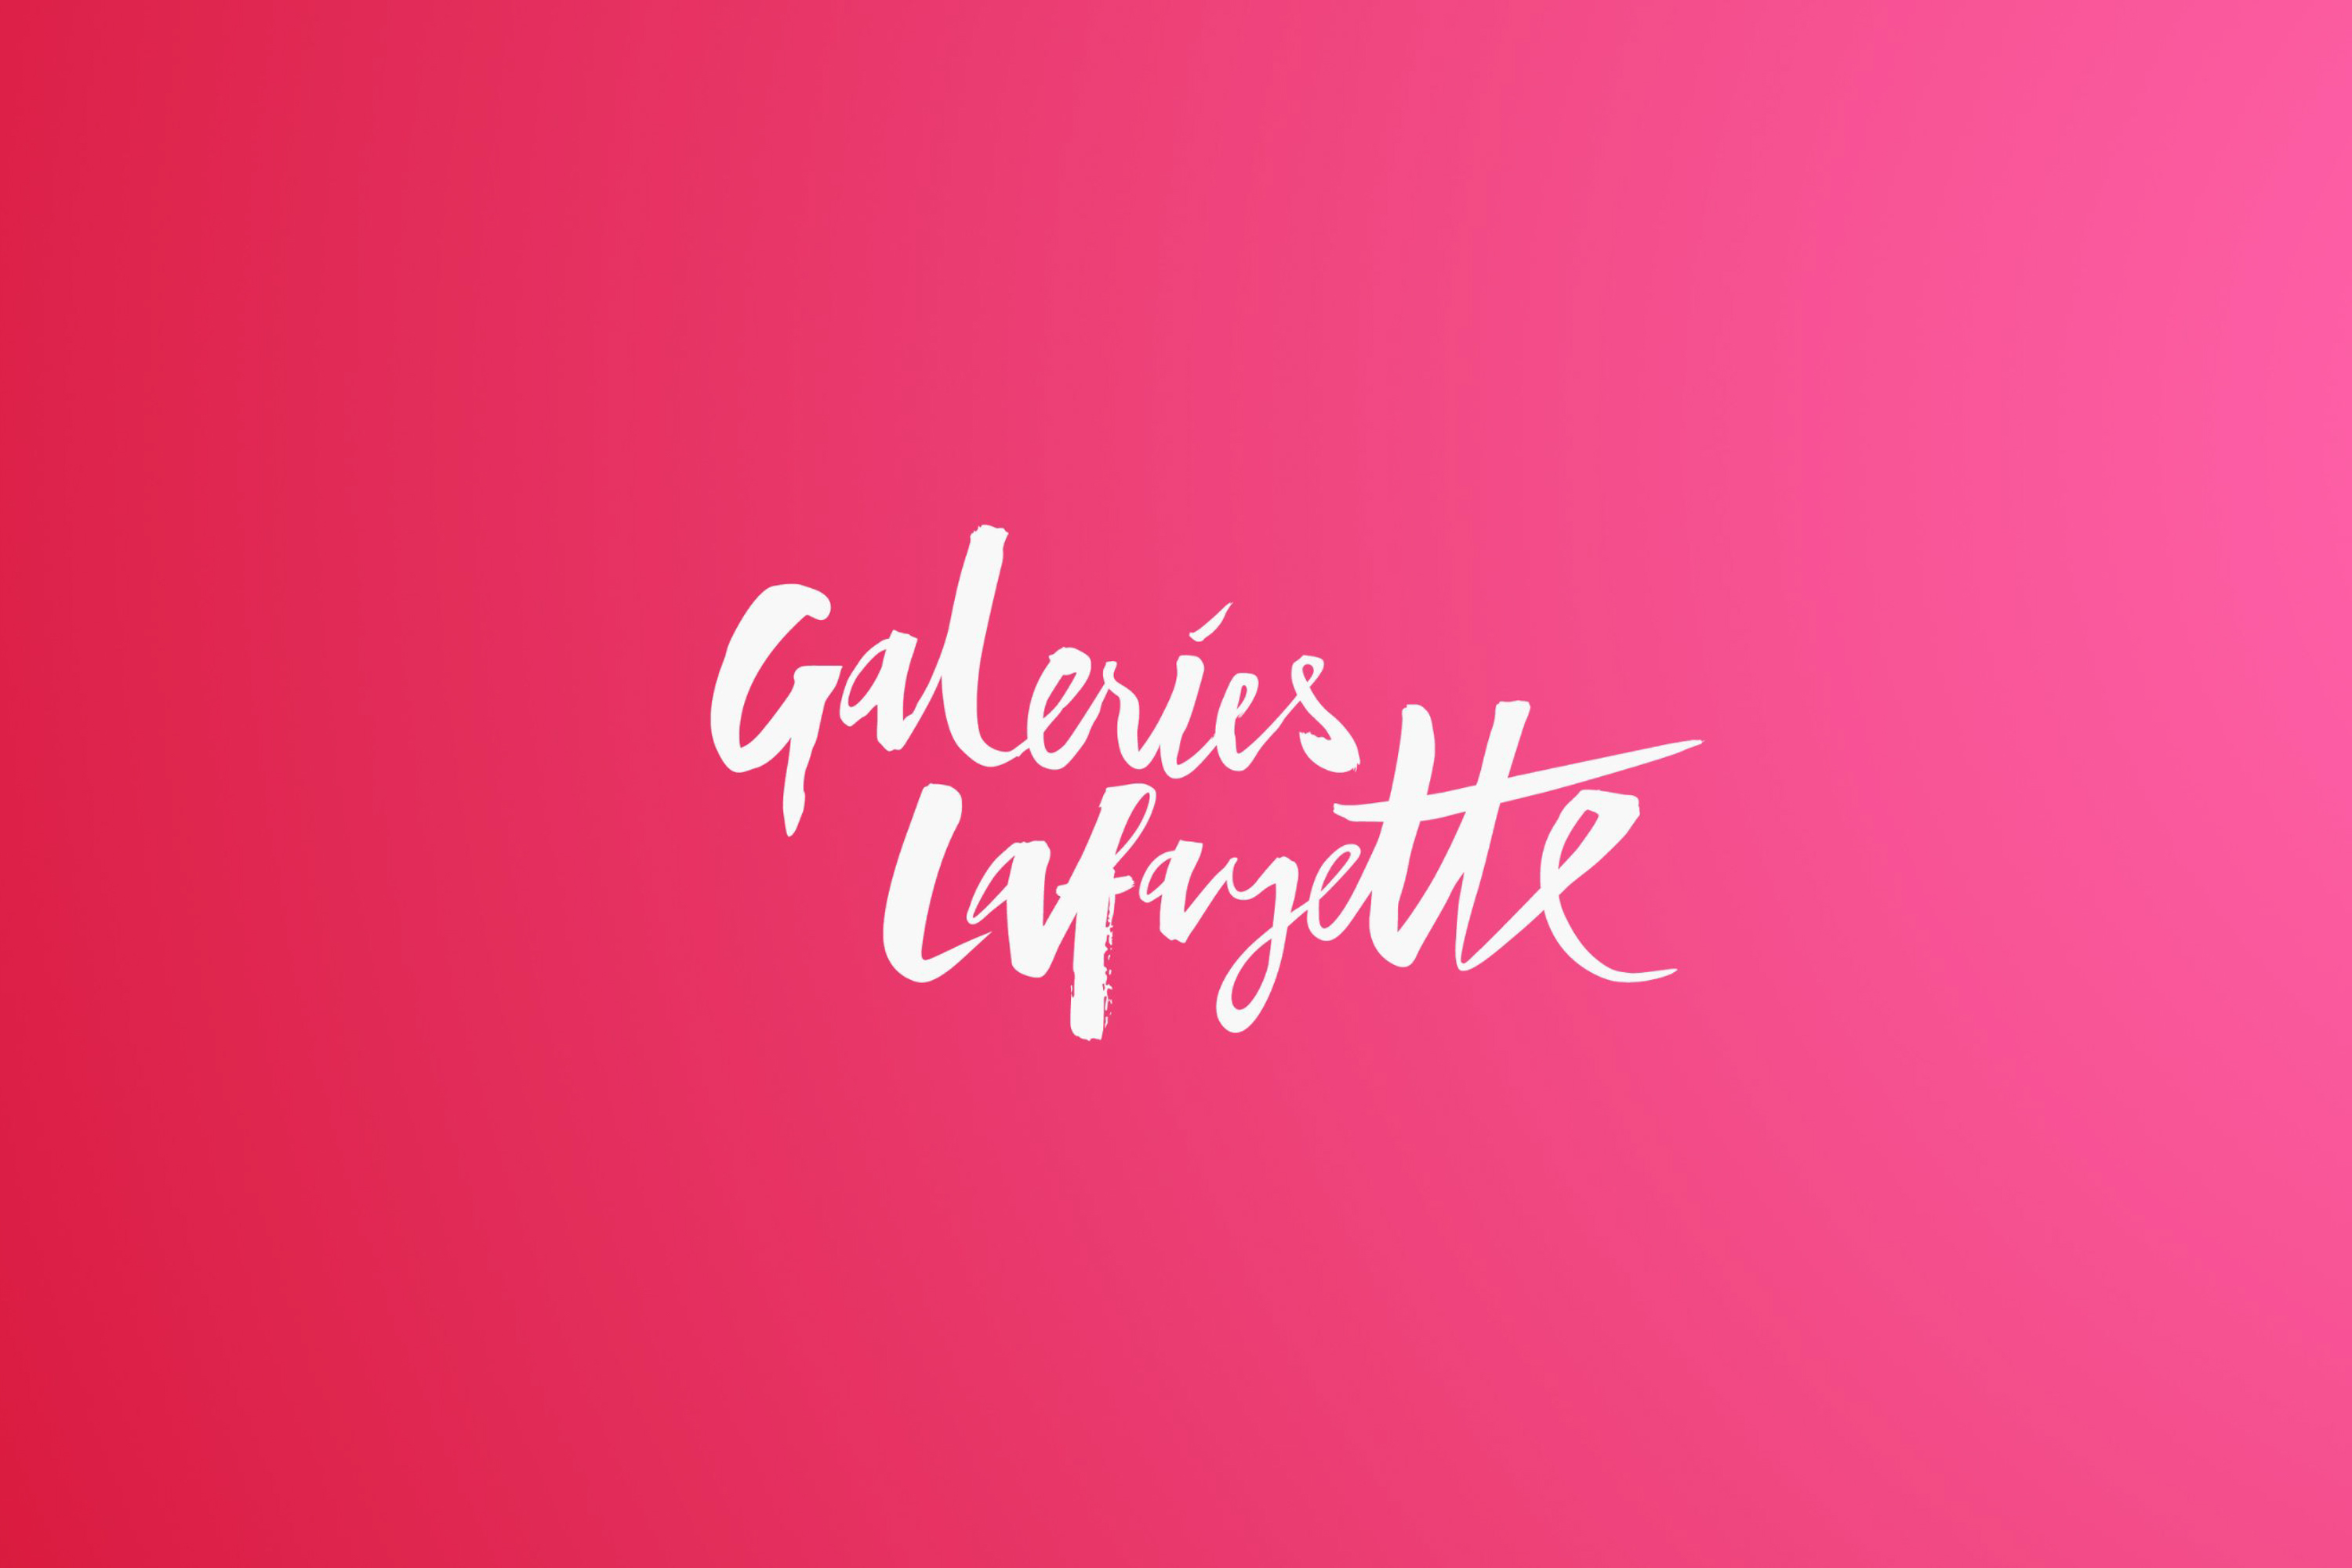 Logo Galeries Lafayette sur fond rose